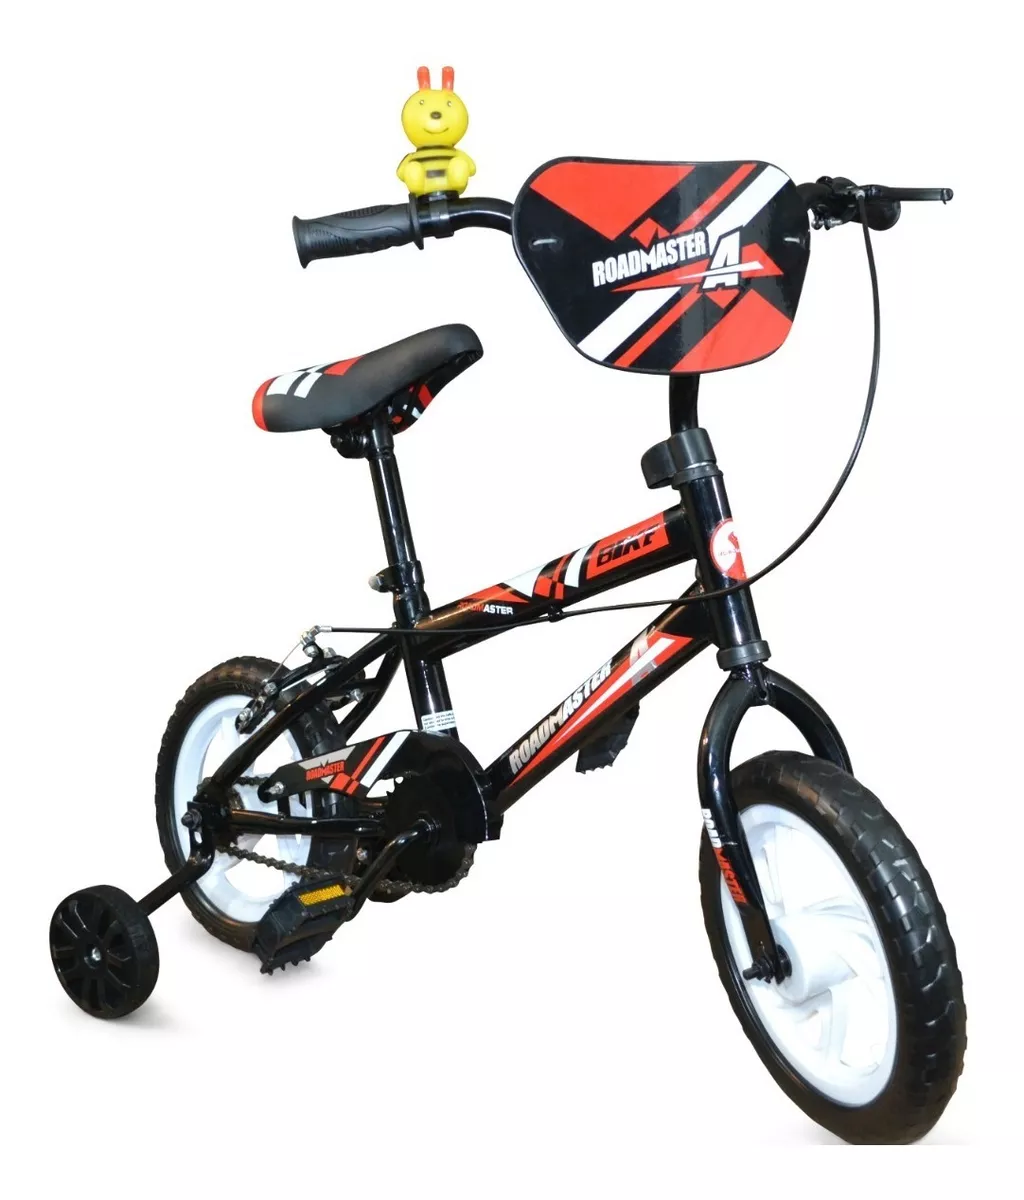 Bicicleta Roadmaster Infantil Rin 12 Accesorios Niño Y Niña